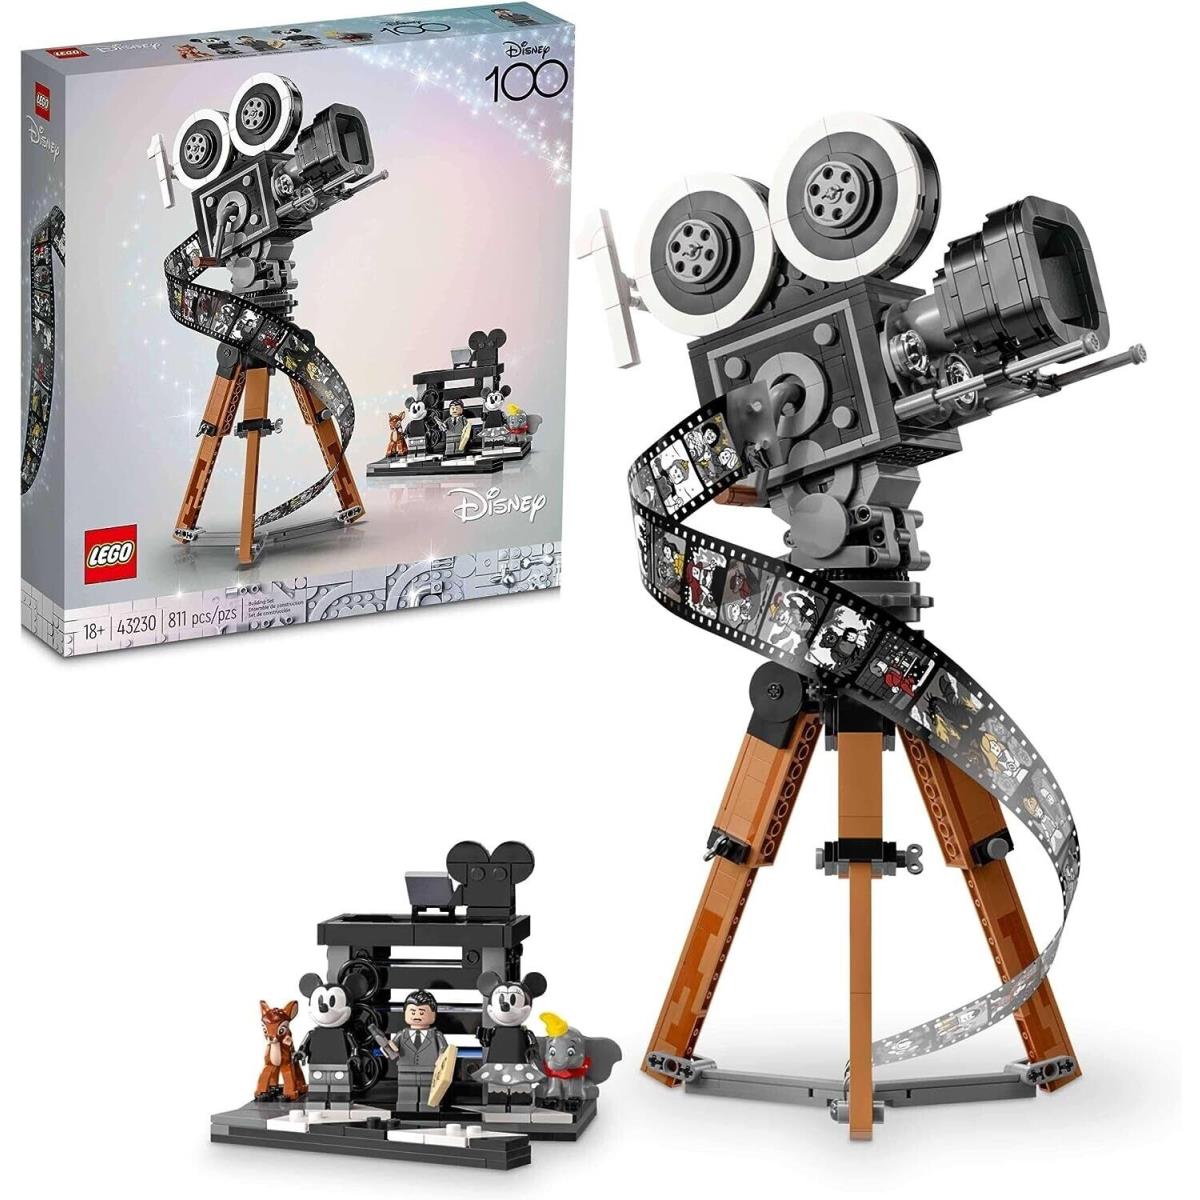 Lego Walt Disney Tribute Camera 43230 100 Years of Disney Ship Worldwide